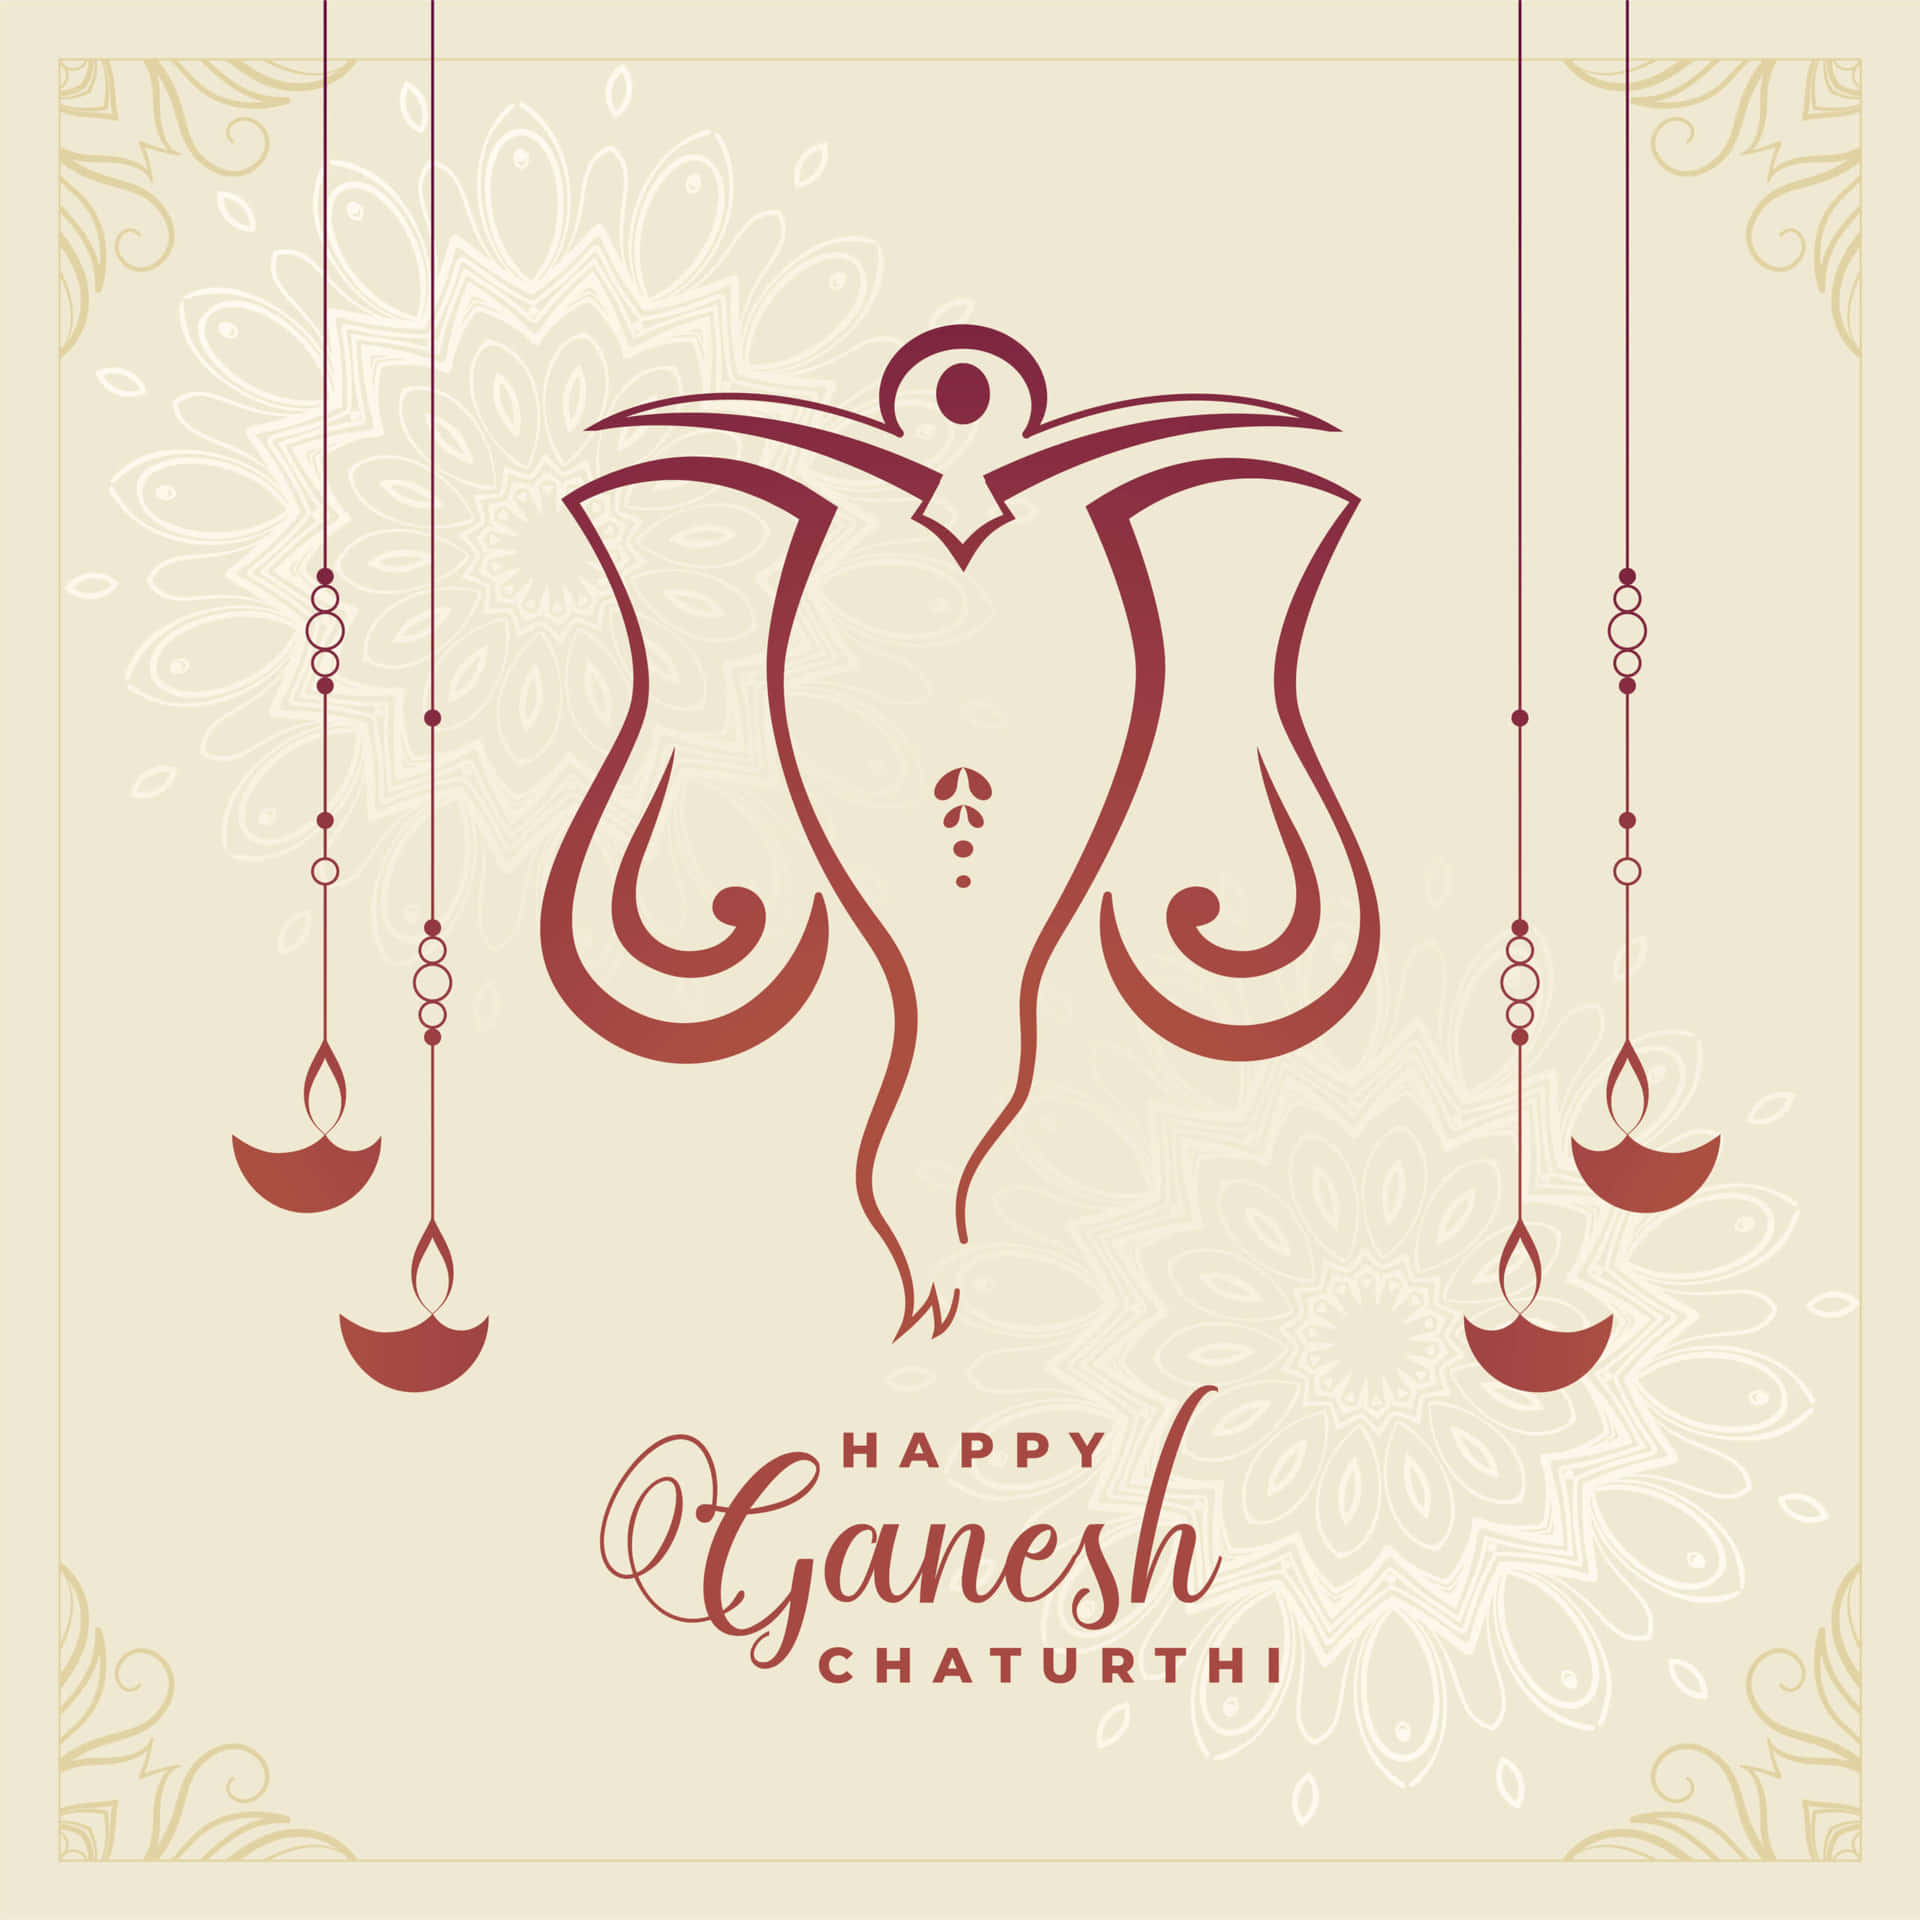 Divine Enlightenment - Lord Ganesha On Ganesh Chaturthi